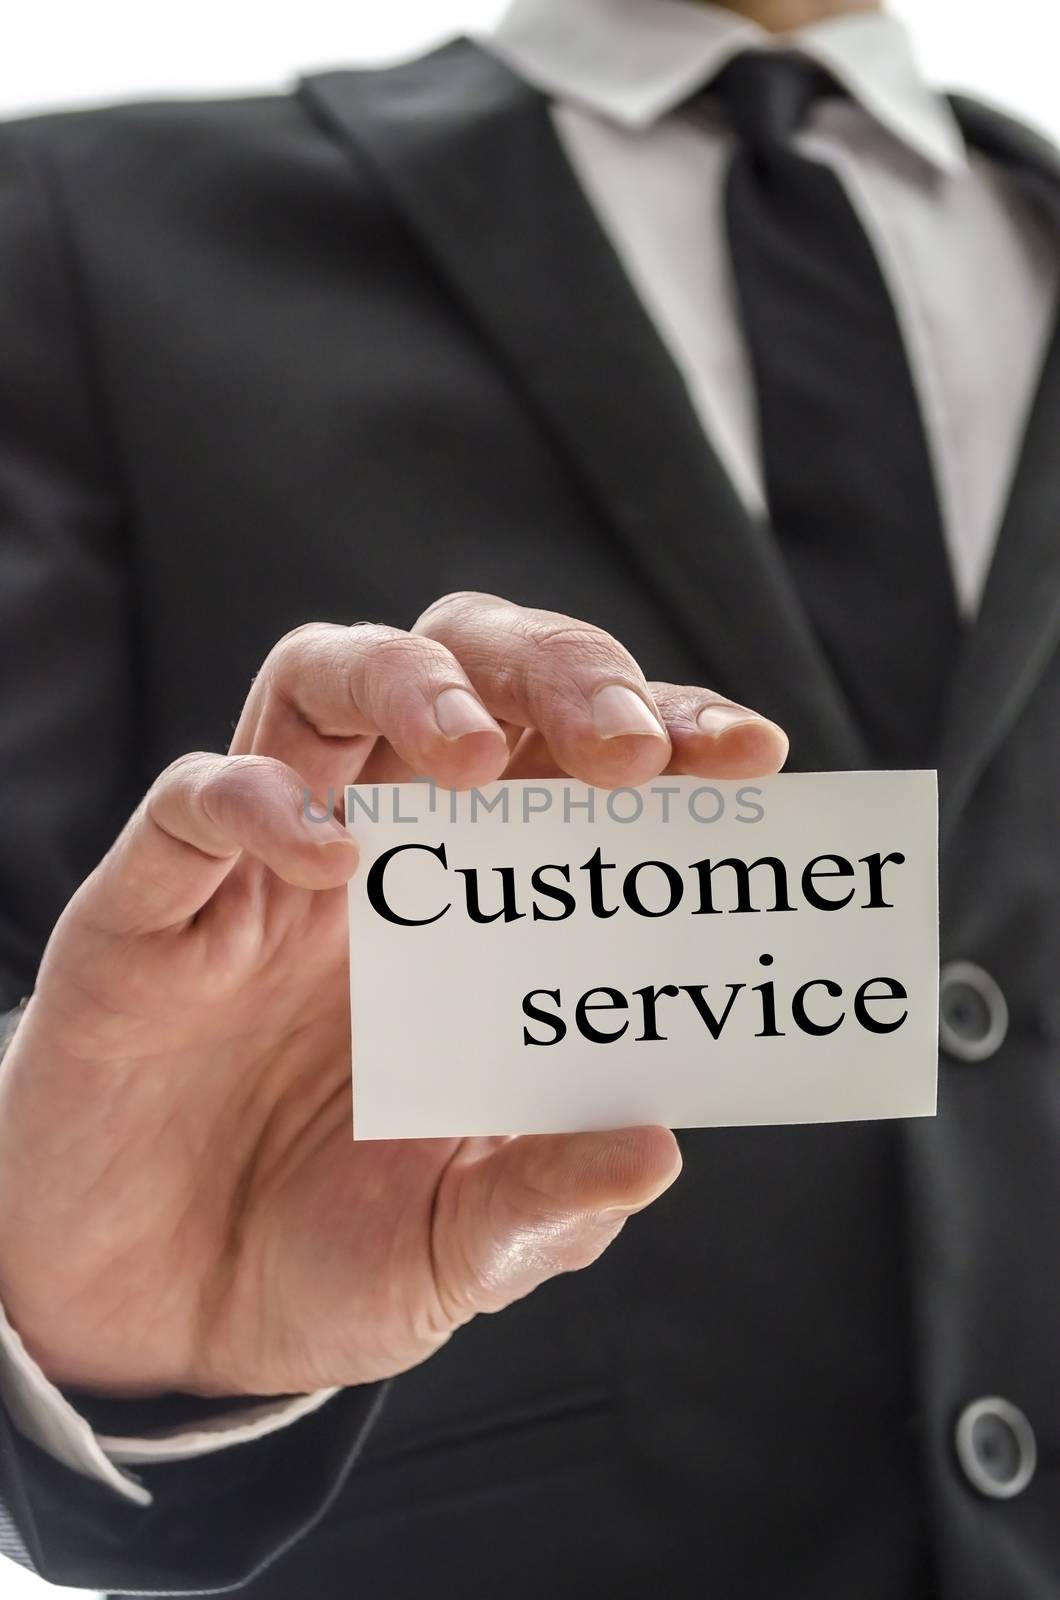 Customer service by Gajus